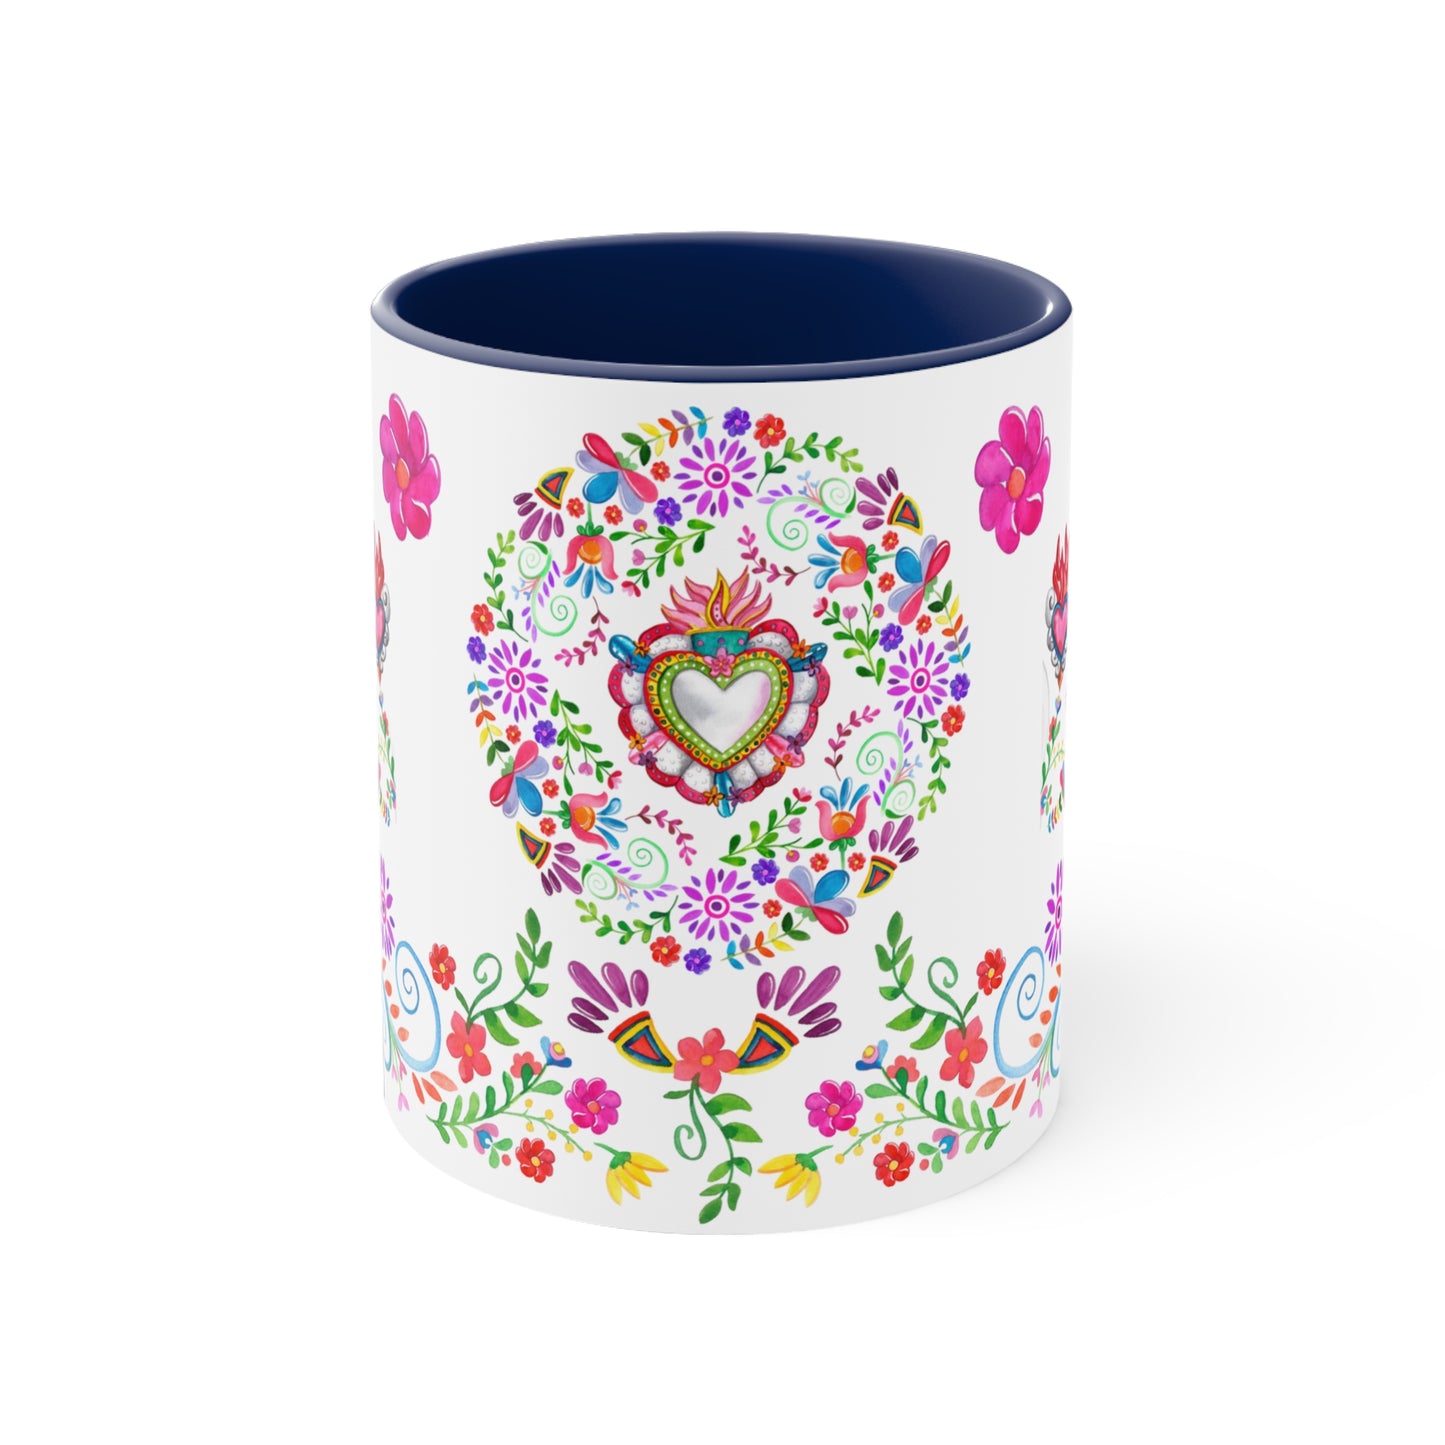 Sacred hearts Coffee Mug, 11oz. Milagritos coffee mug for Mexican friends. Mexican folk art mug for her.